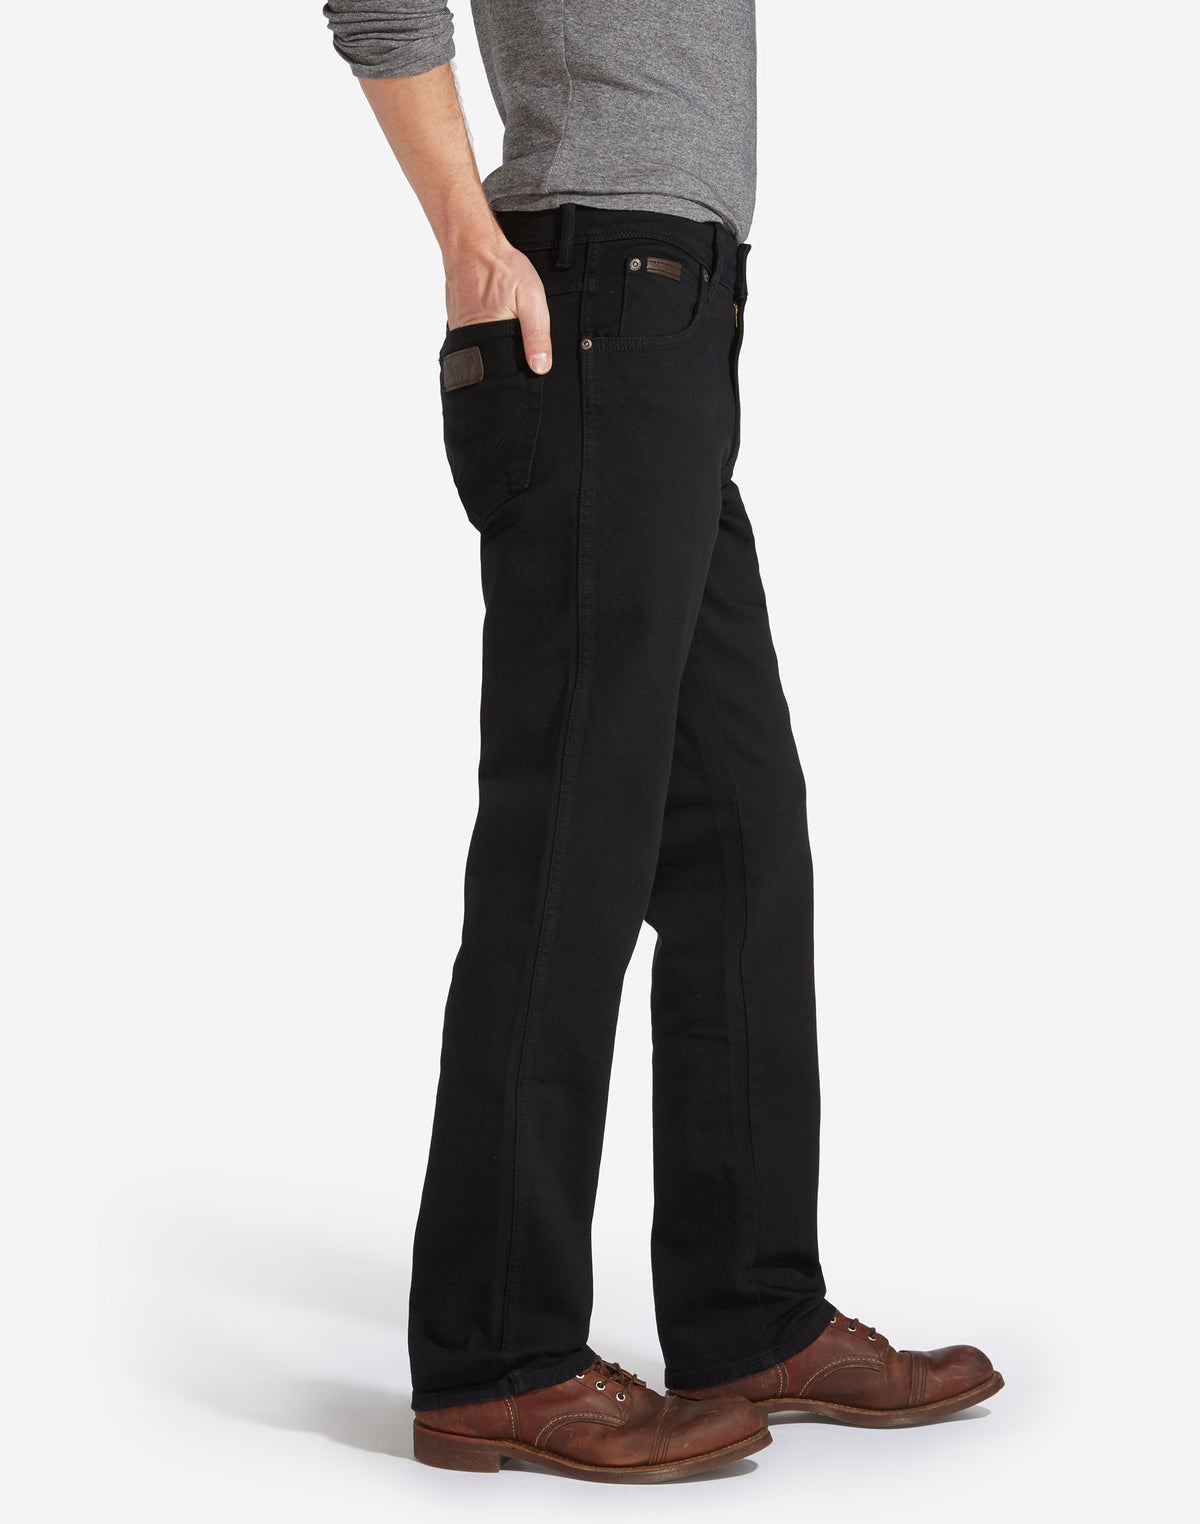 Mens Wrangler 'Texas' Jeans - Denim Stretch - Original Straight Fit, 02, W121-Core, Black Overdye